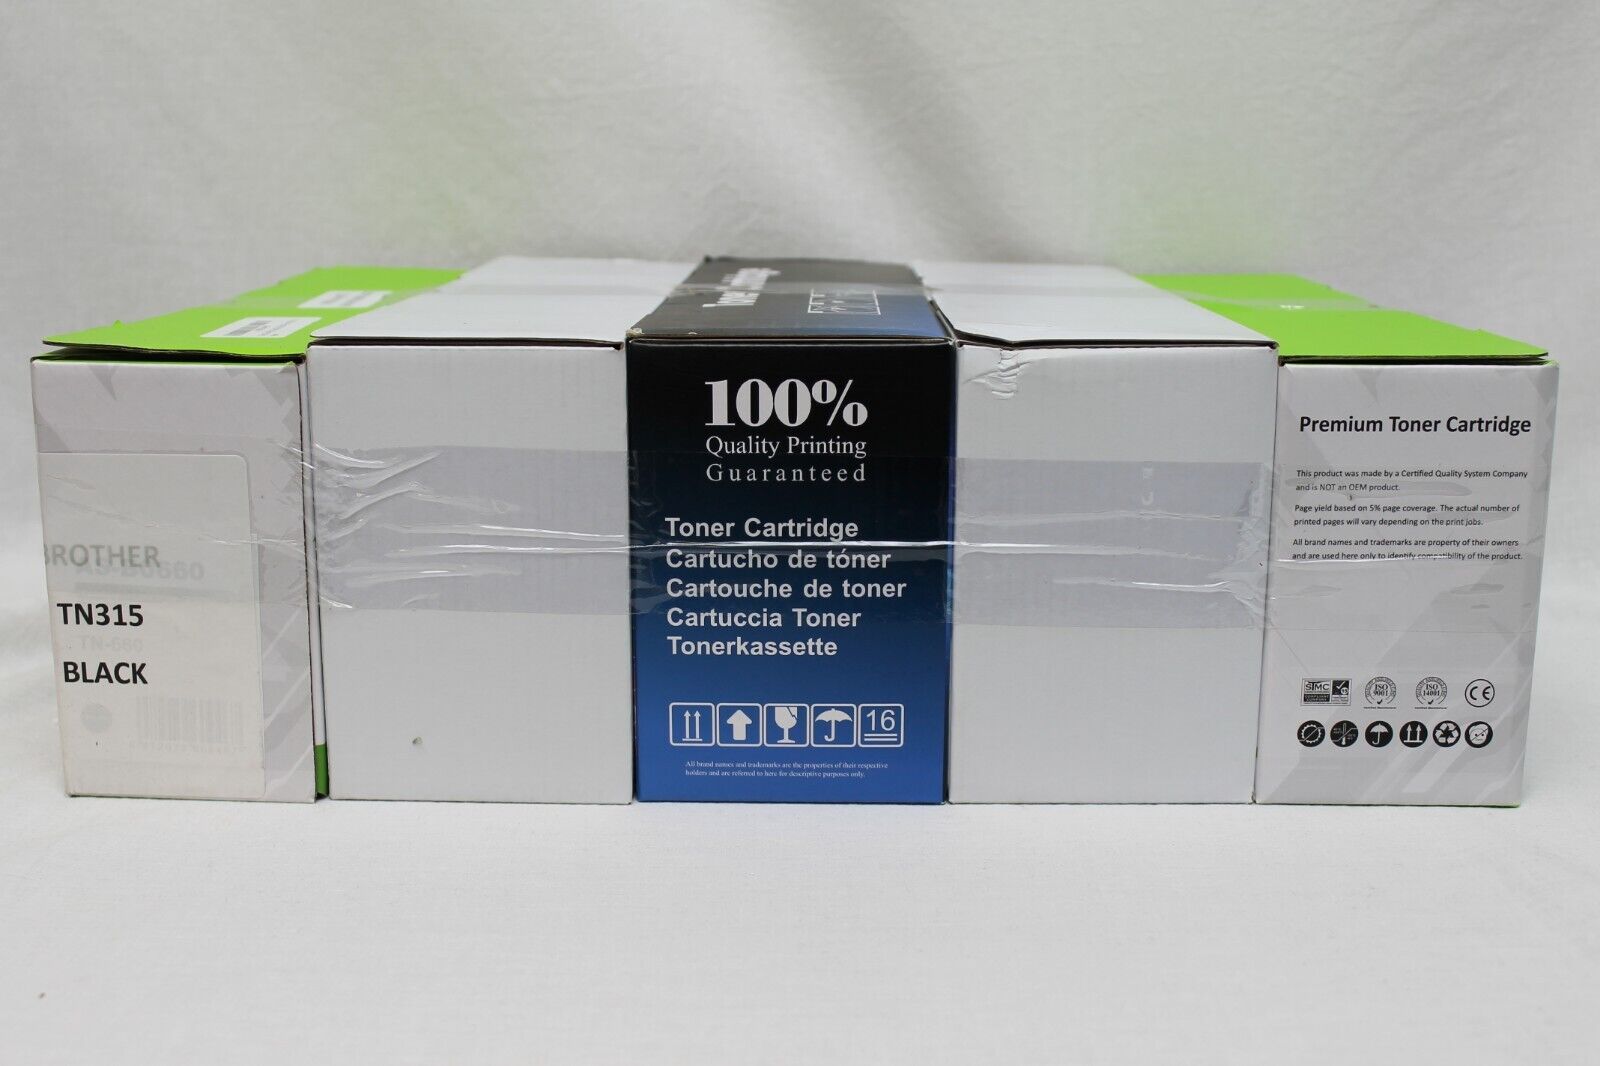 Premium Toner Cartridge Set Of 5 Toners New In Box